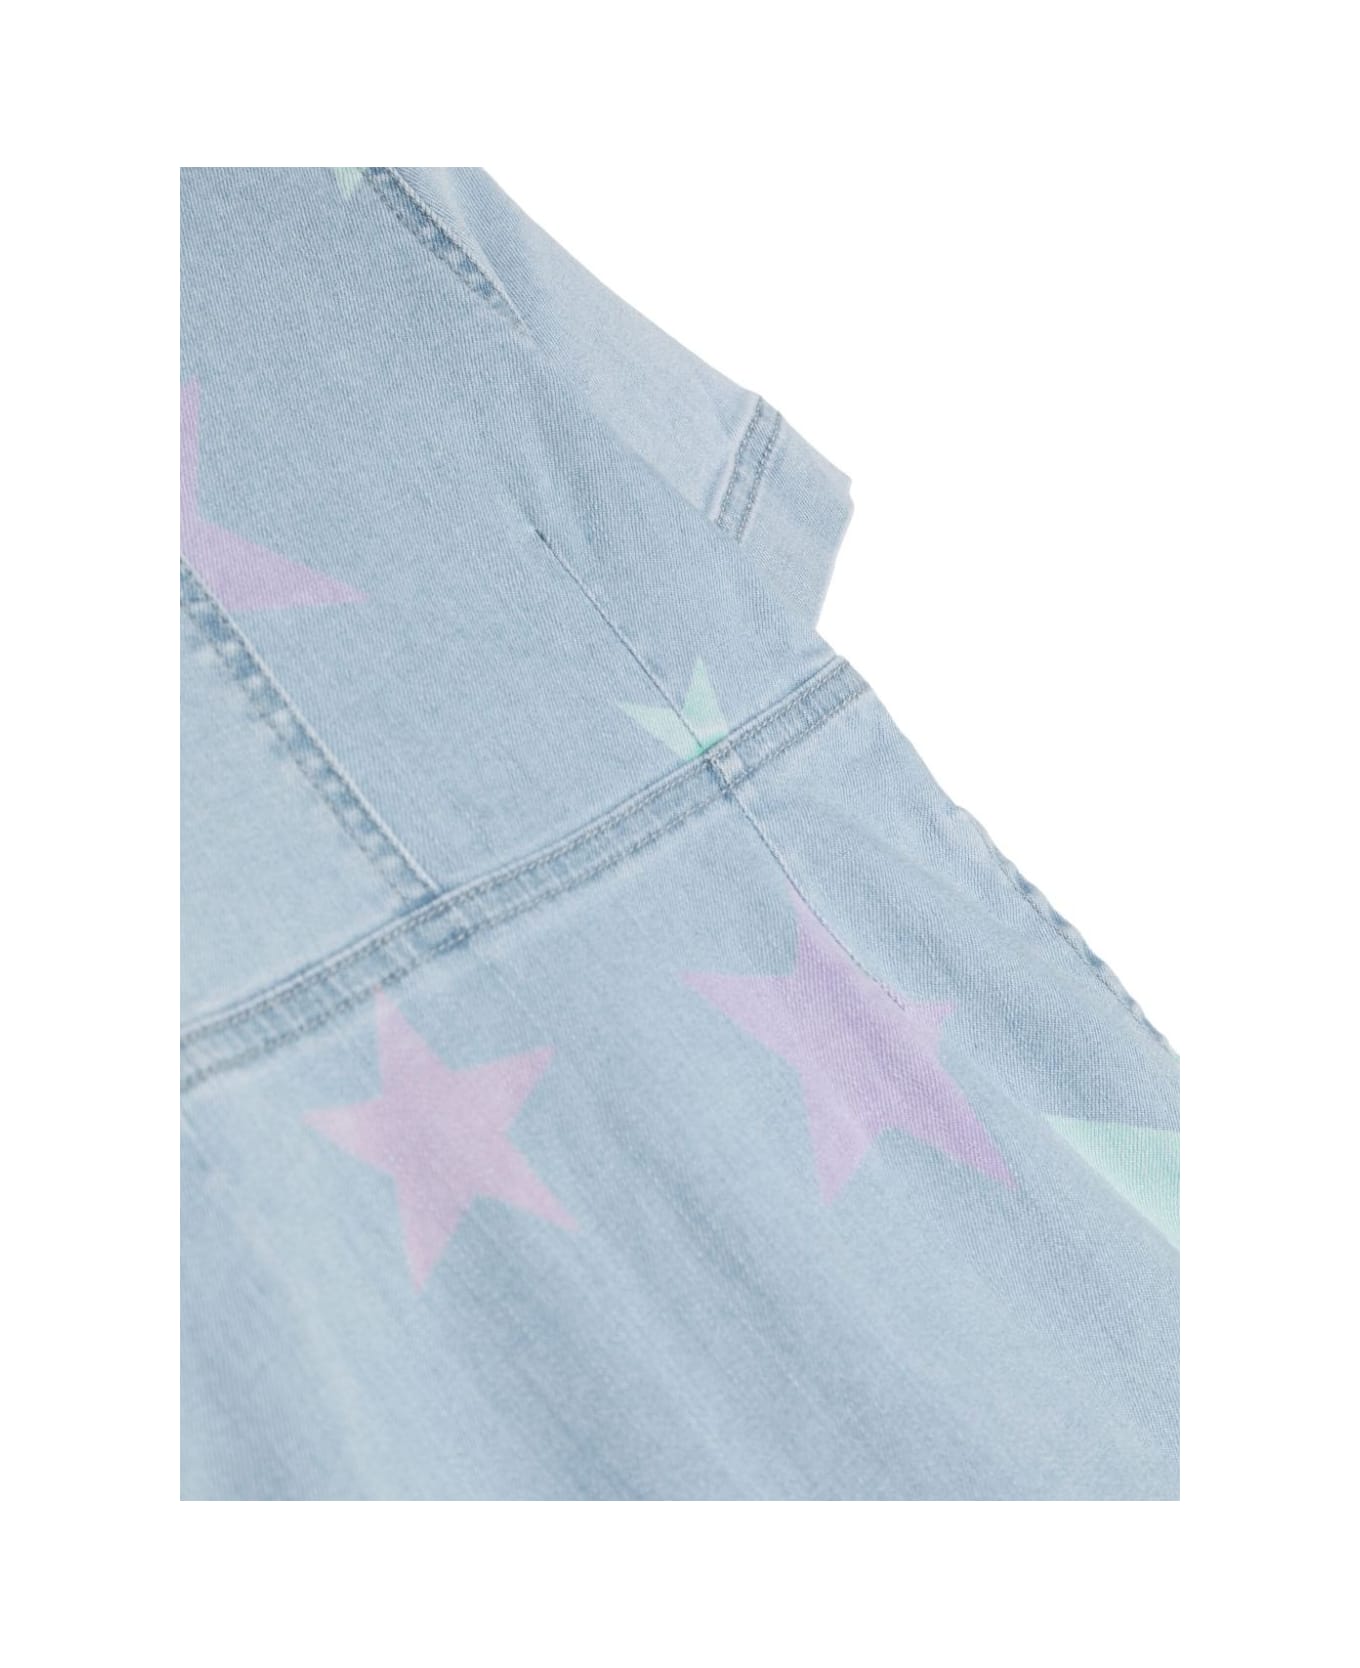 Stella McCartney Kids Denim T-shirt Dress With Star Print - Blue ワンピース＆ドレス